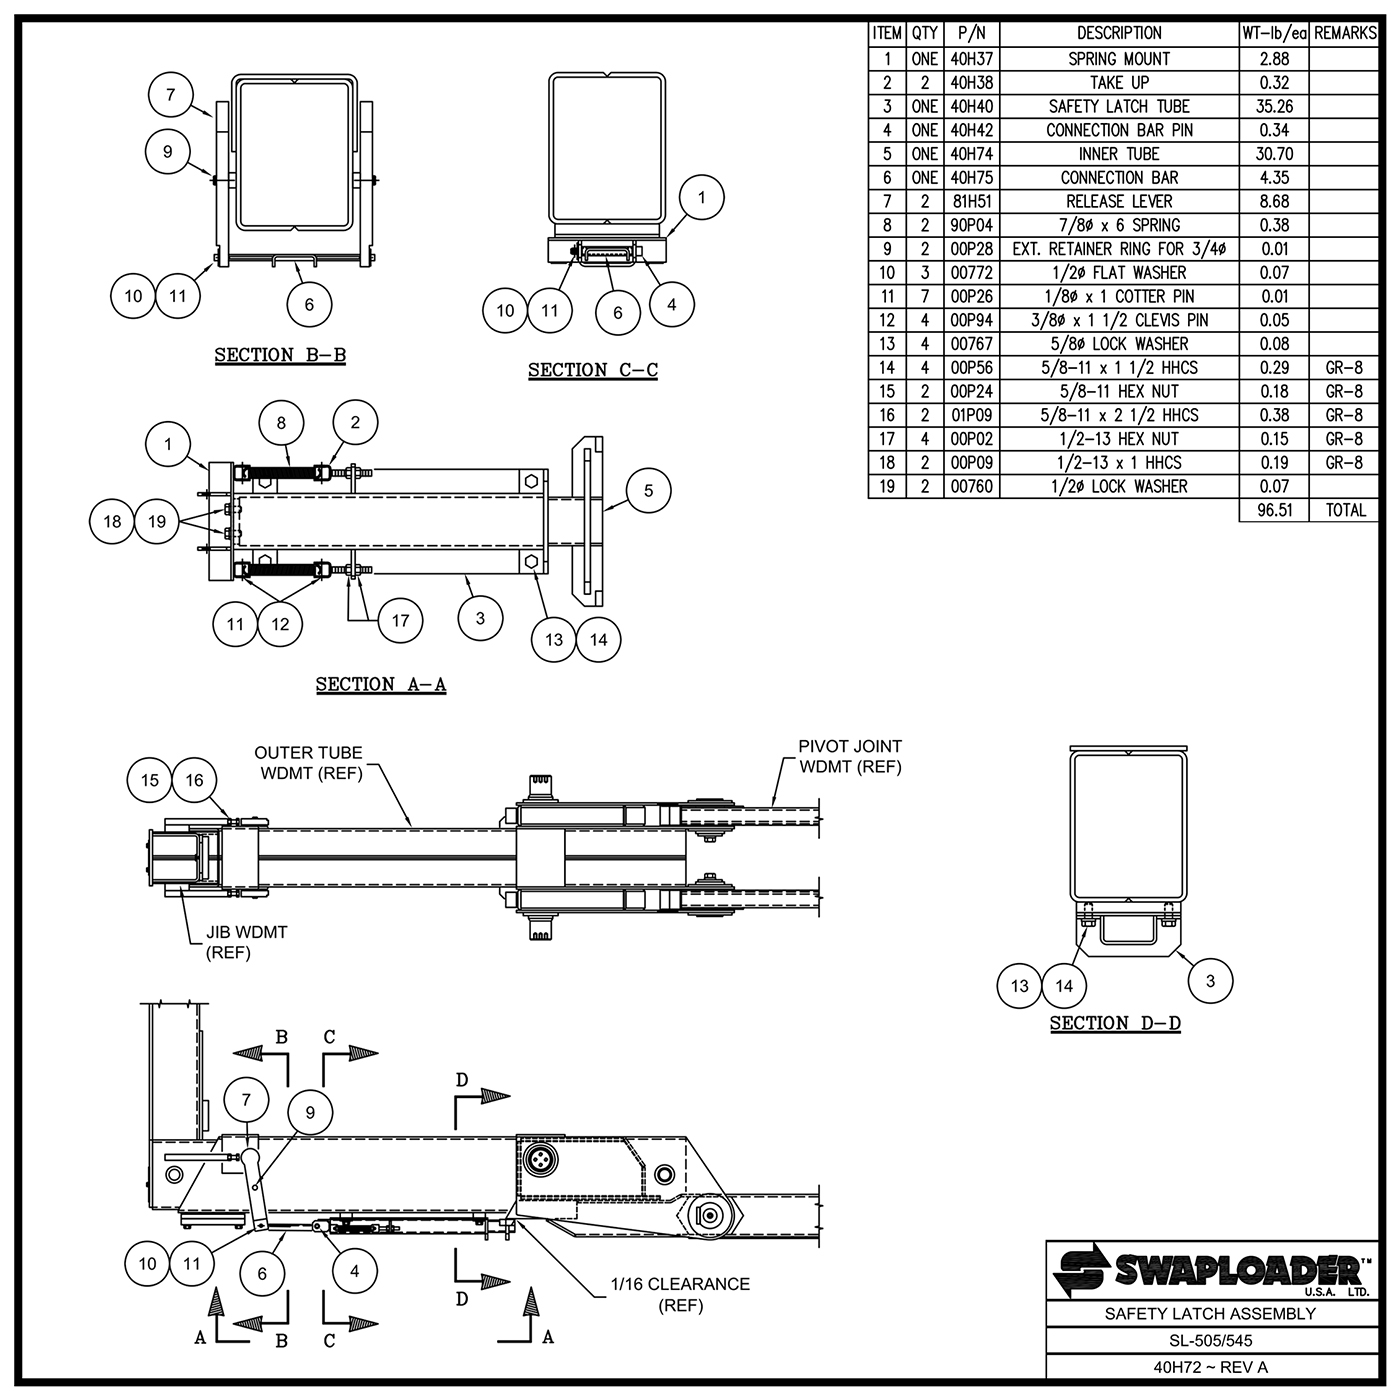 Swaploader SL-505/545 Safety Latch Assembly Diagram